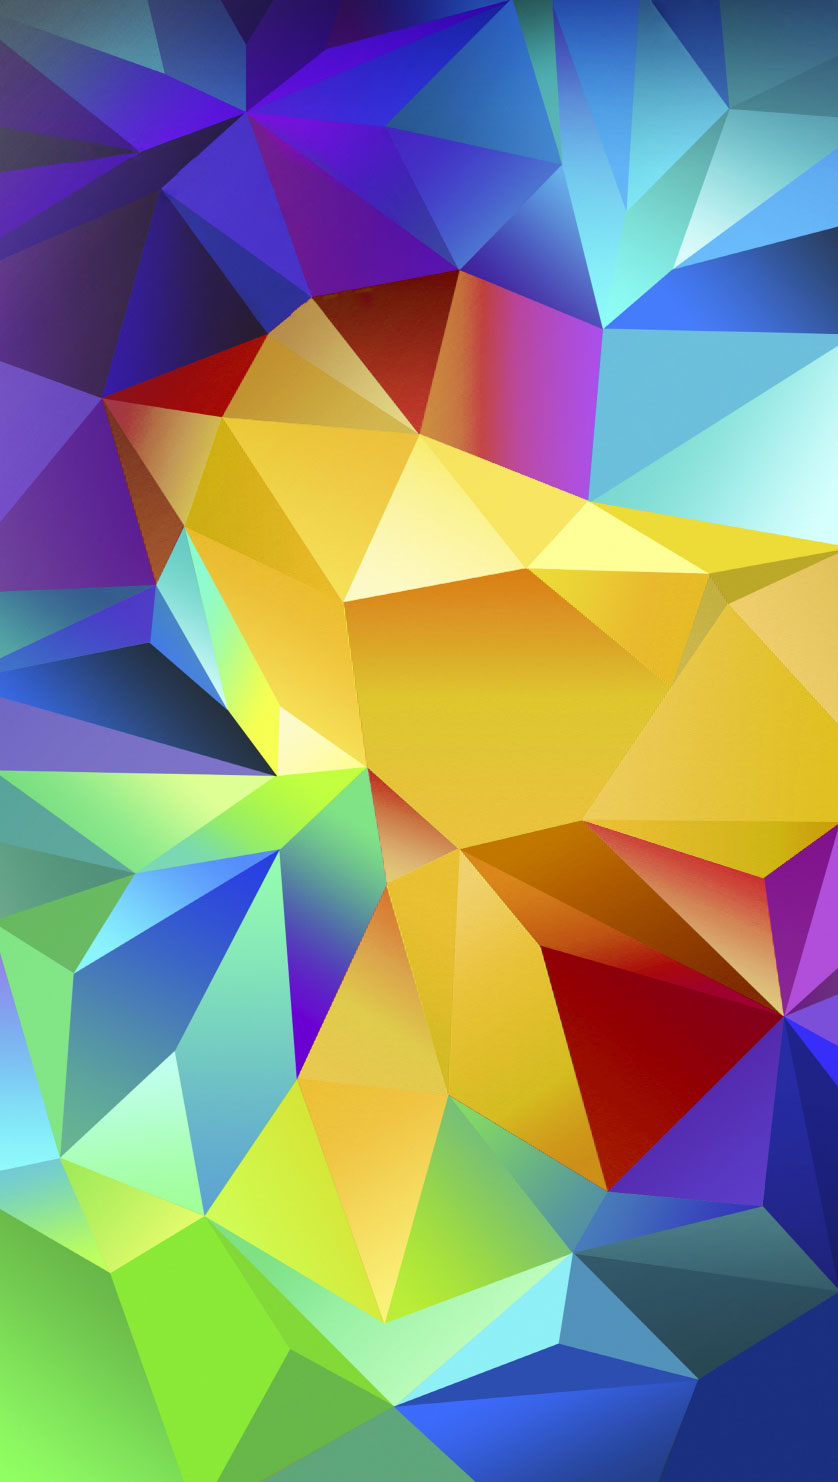 samsung mobile wallpaper,pattern,graphic design,triangle,colorfulness,design